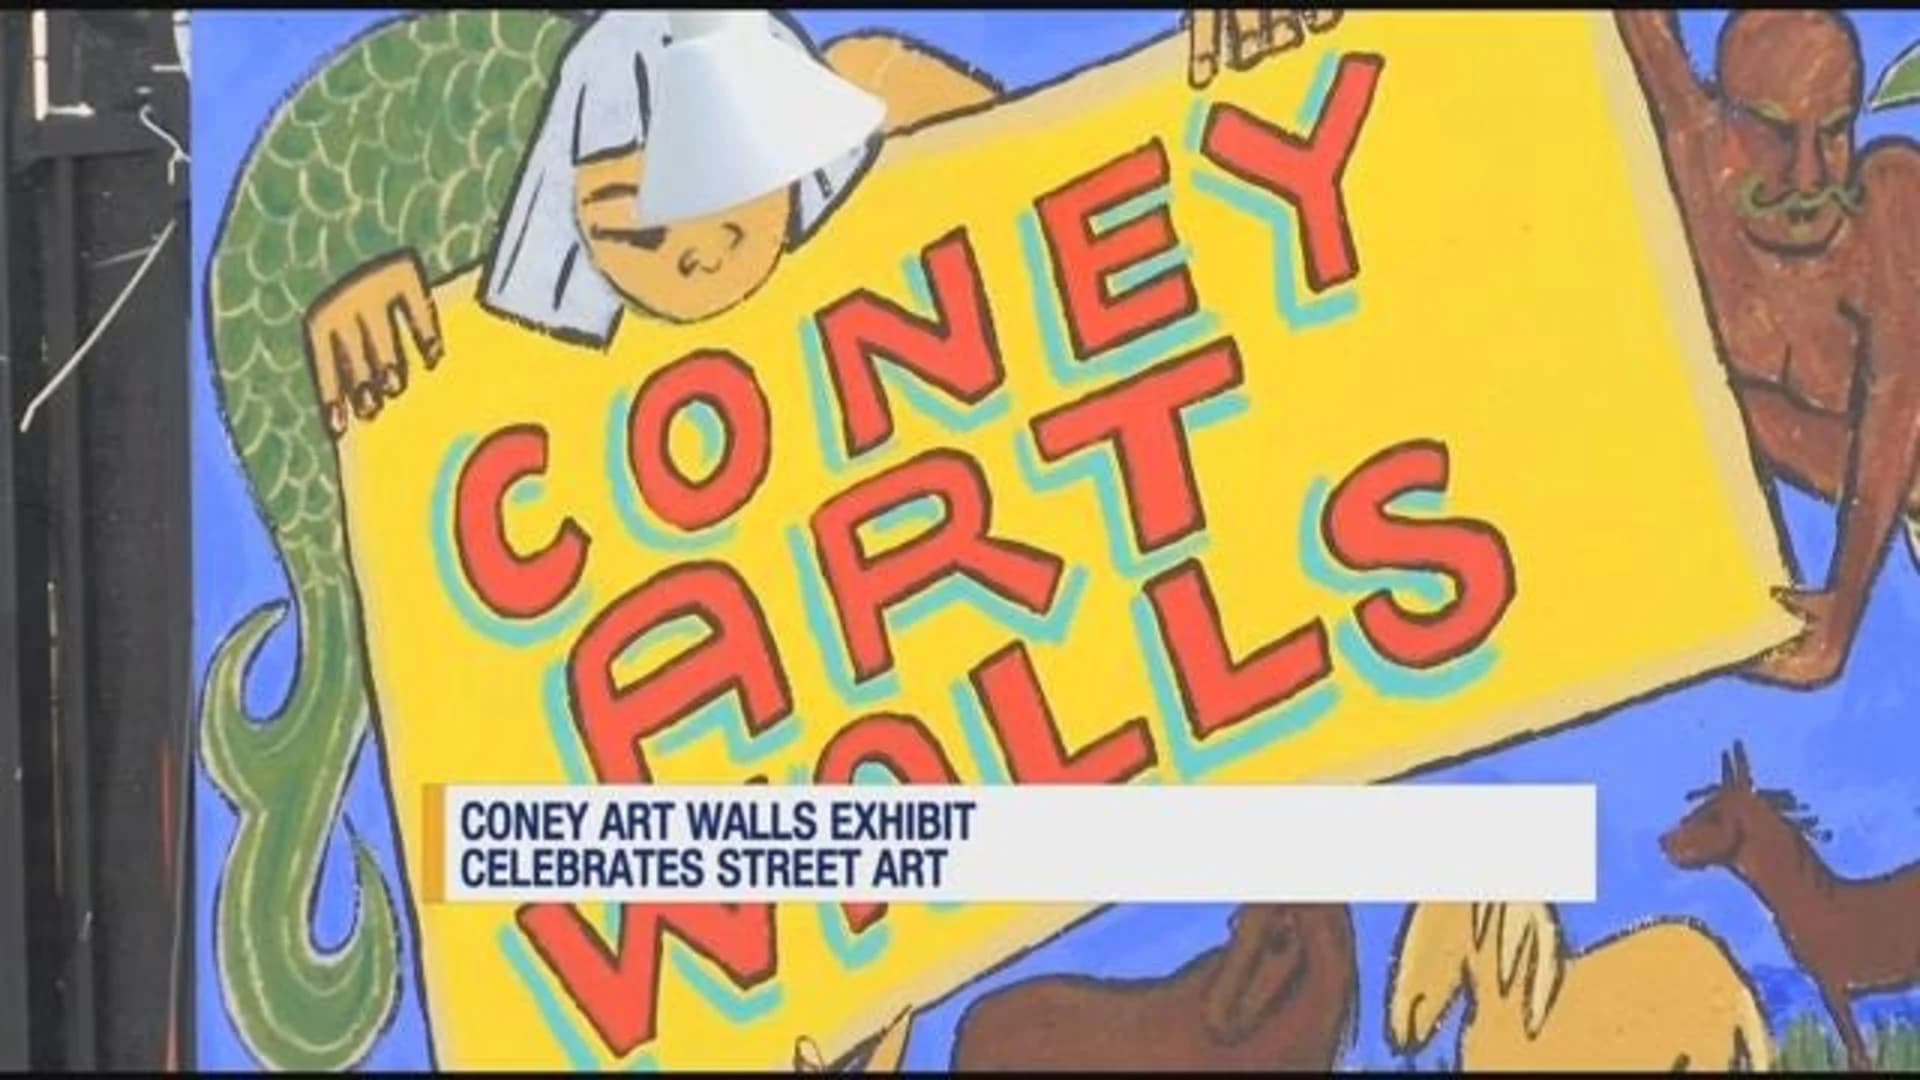 Coney Art Walls features open-air street art displays